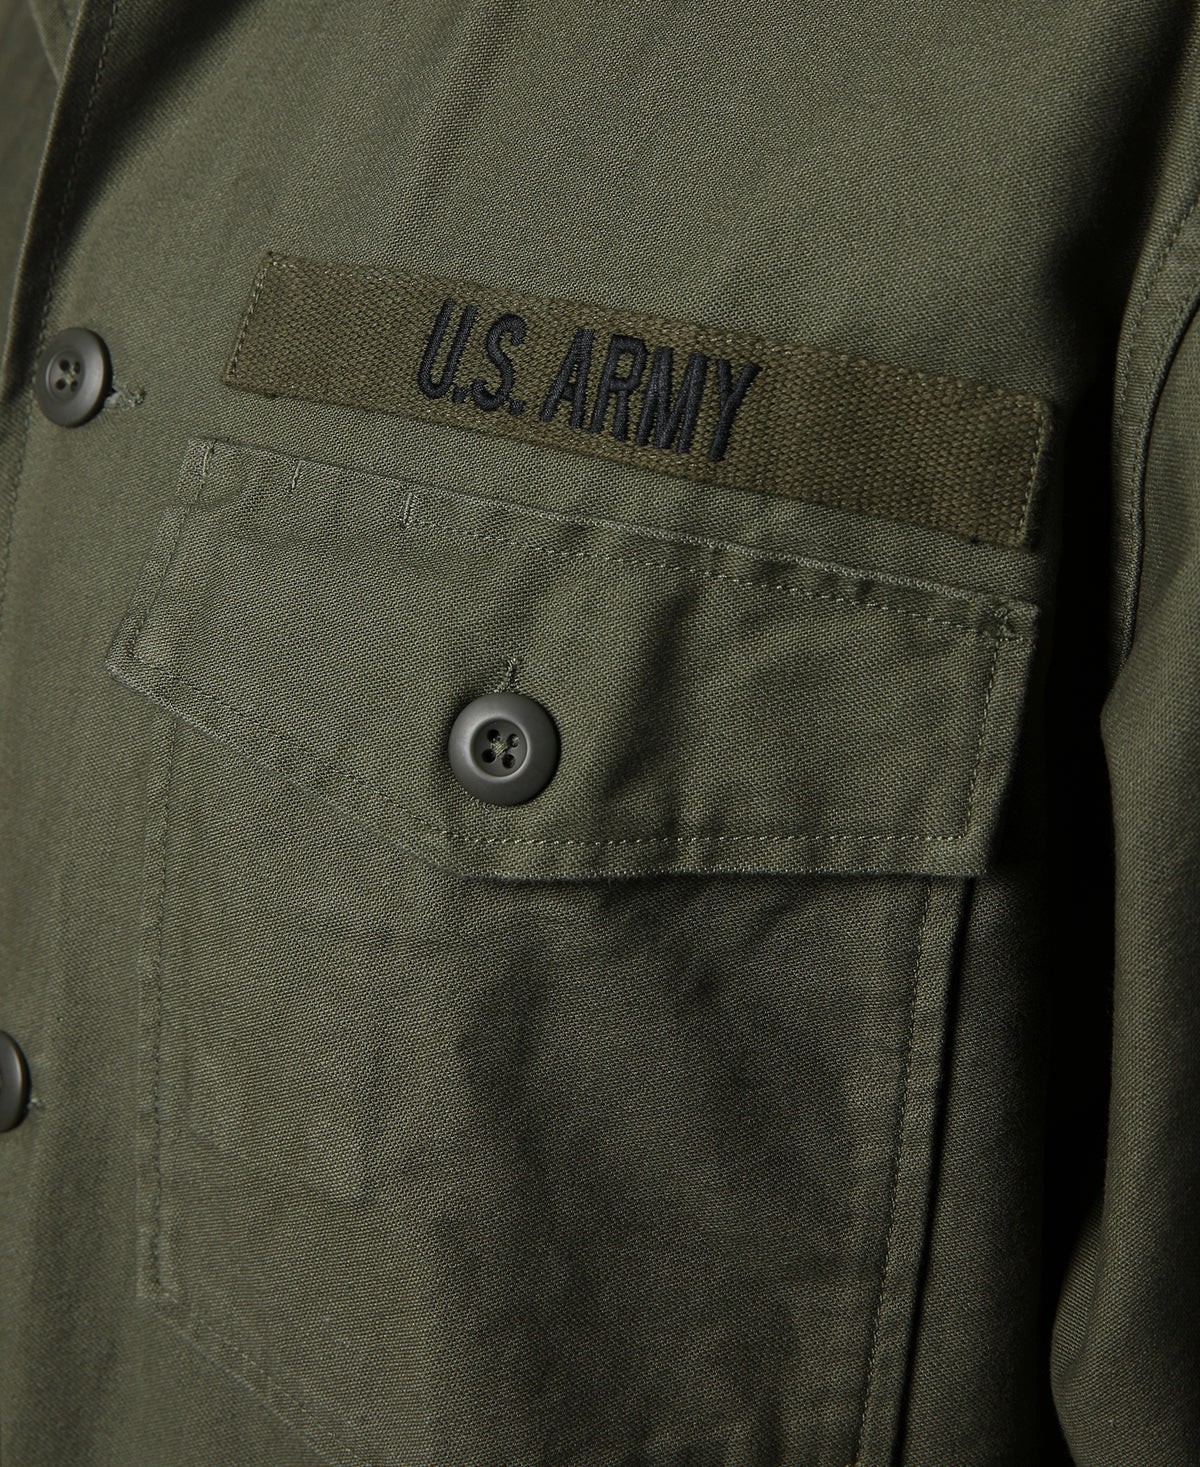 Vietnam War US Army OG-107 Fatigue Utility Shirt - Im Jin Scouts